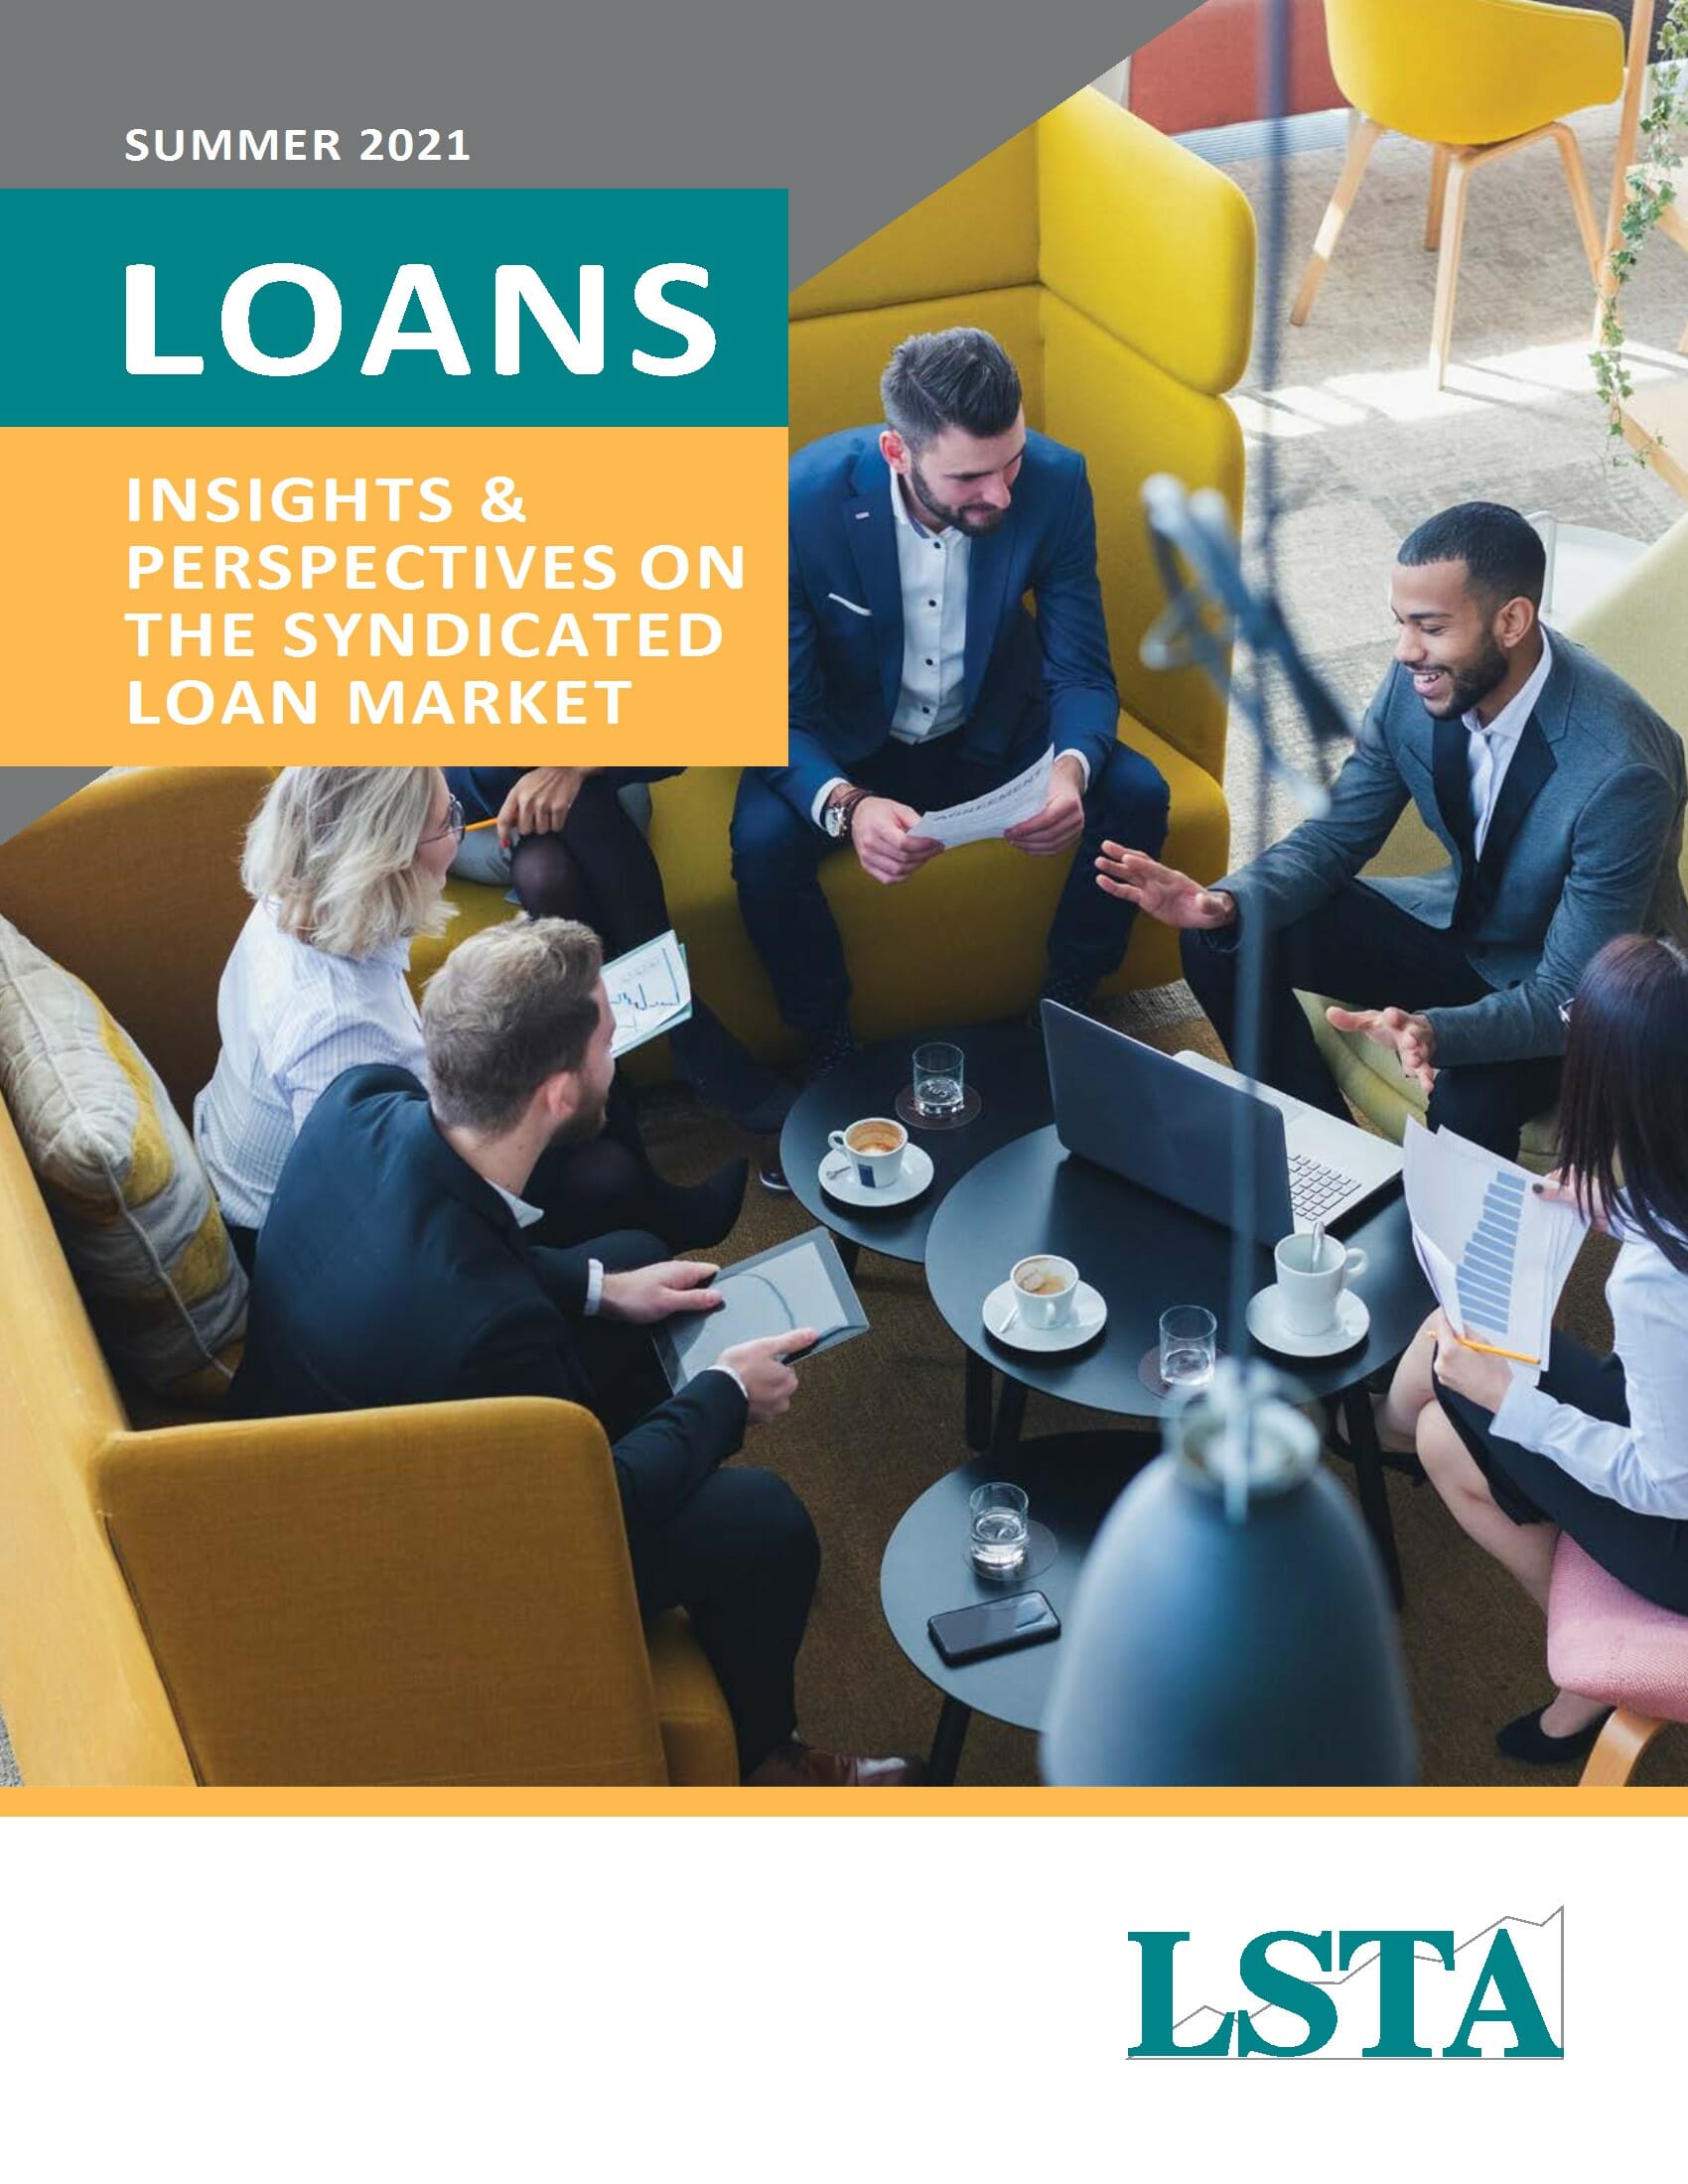 Loans Magazine - Summer 2021 Edition - LSTA